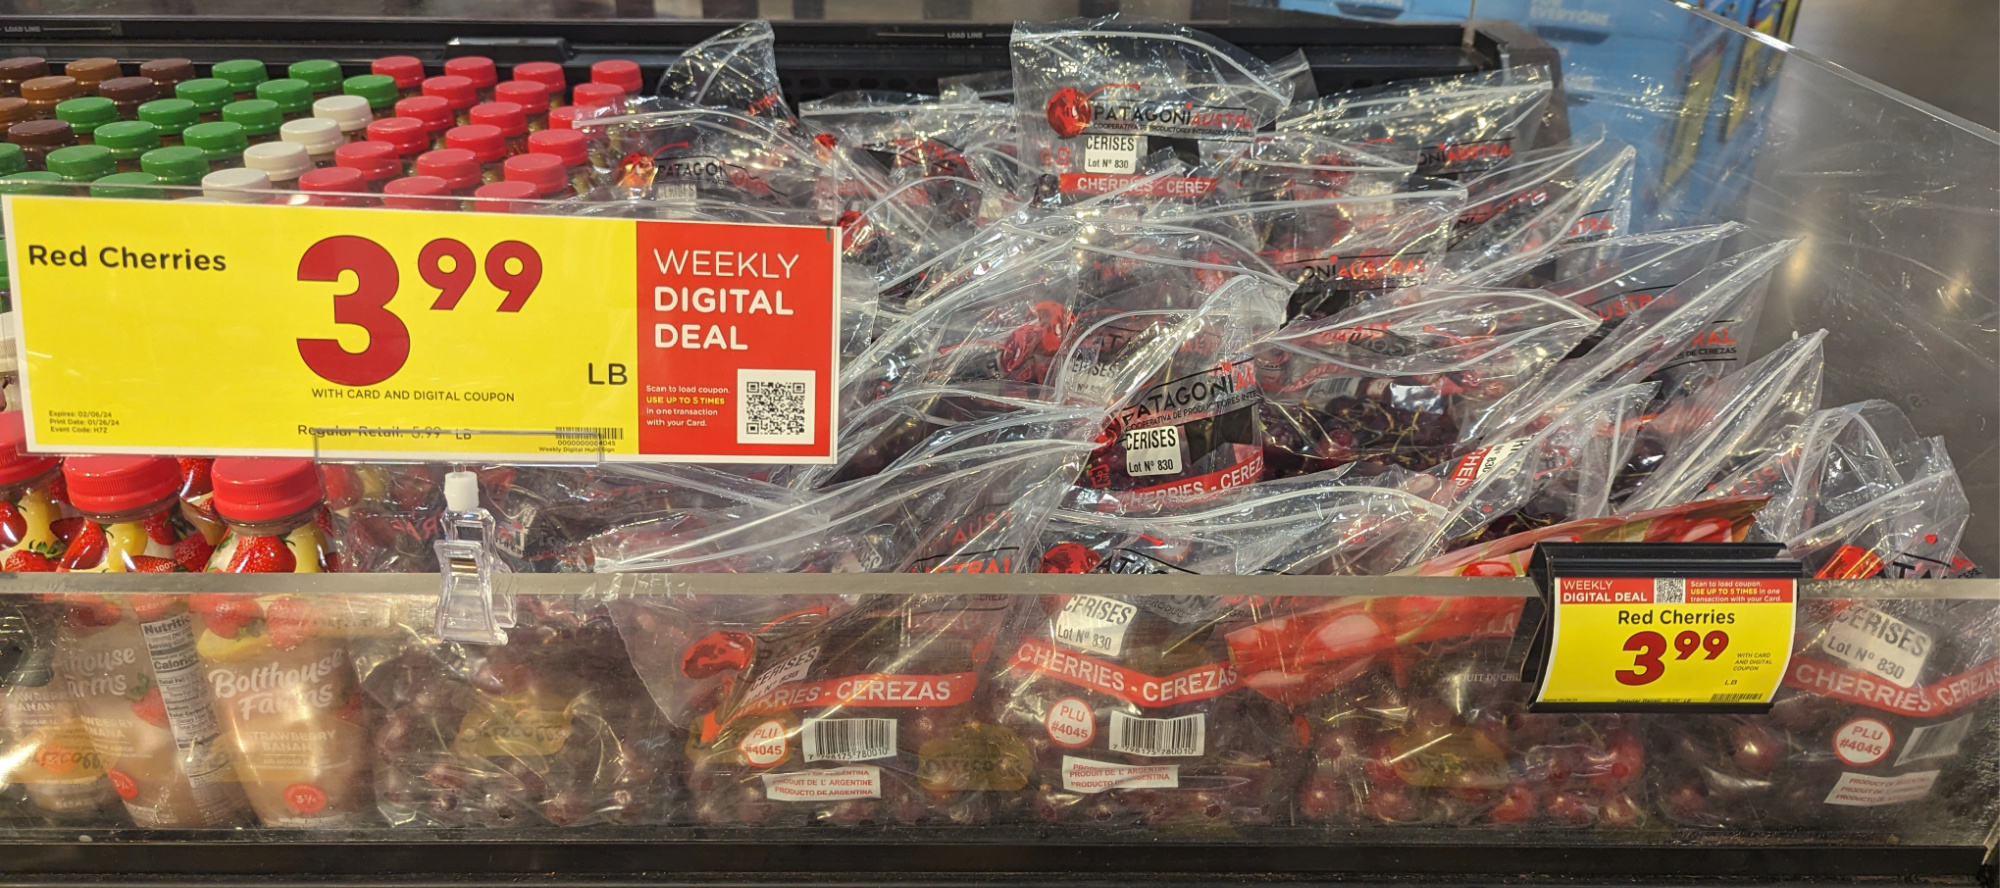 Red Cherries Just $3.99 Per Pound At Kroger